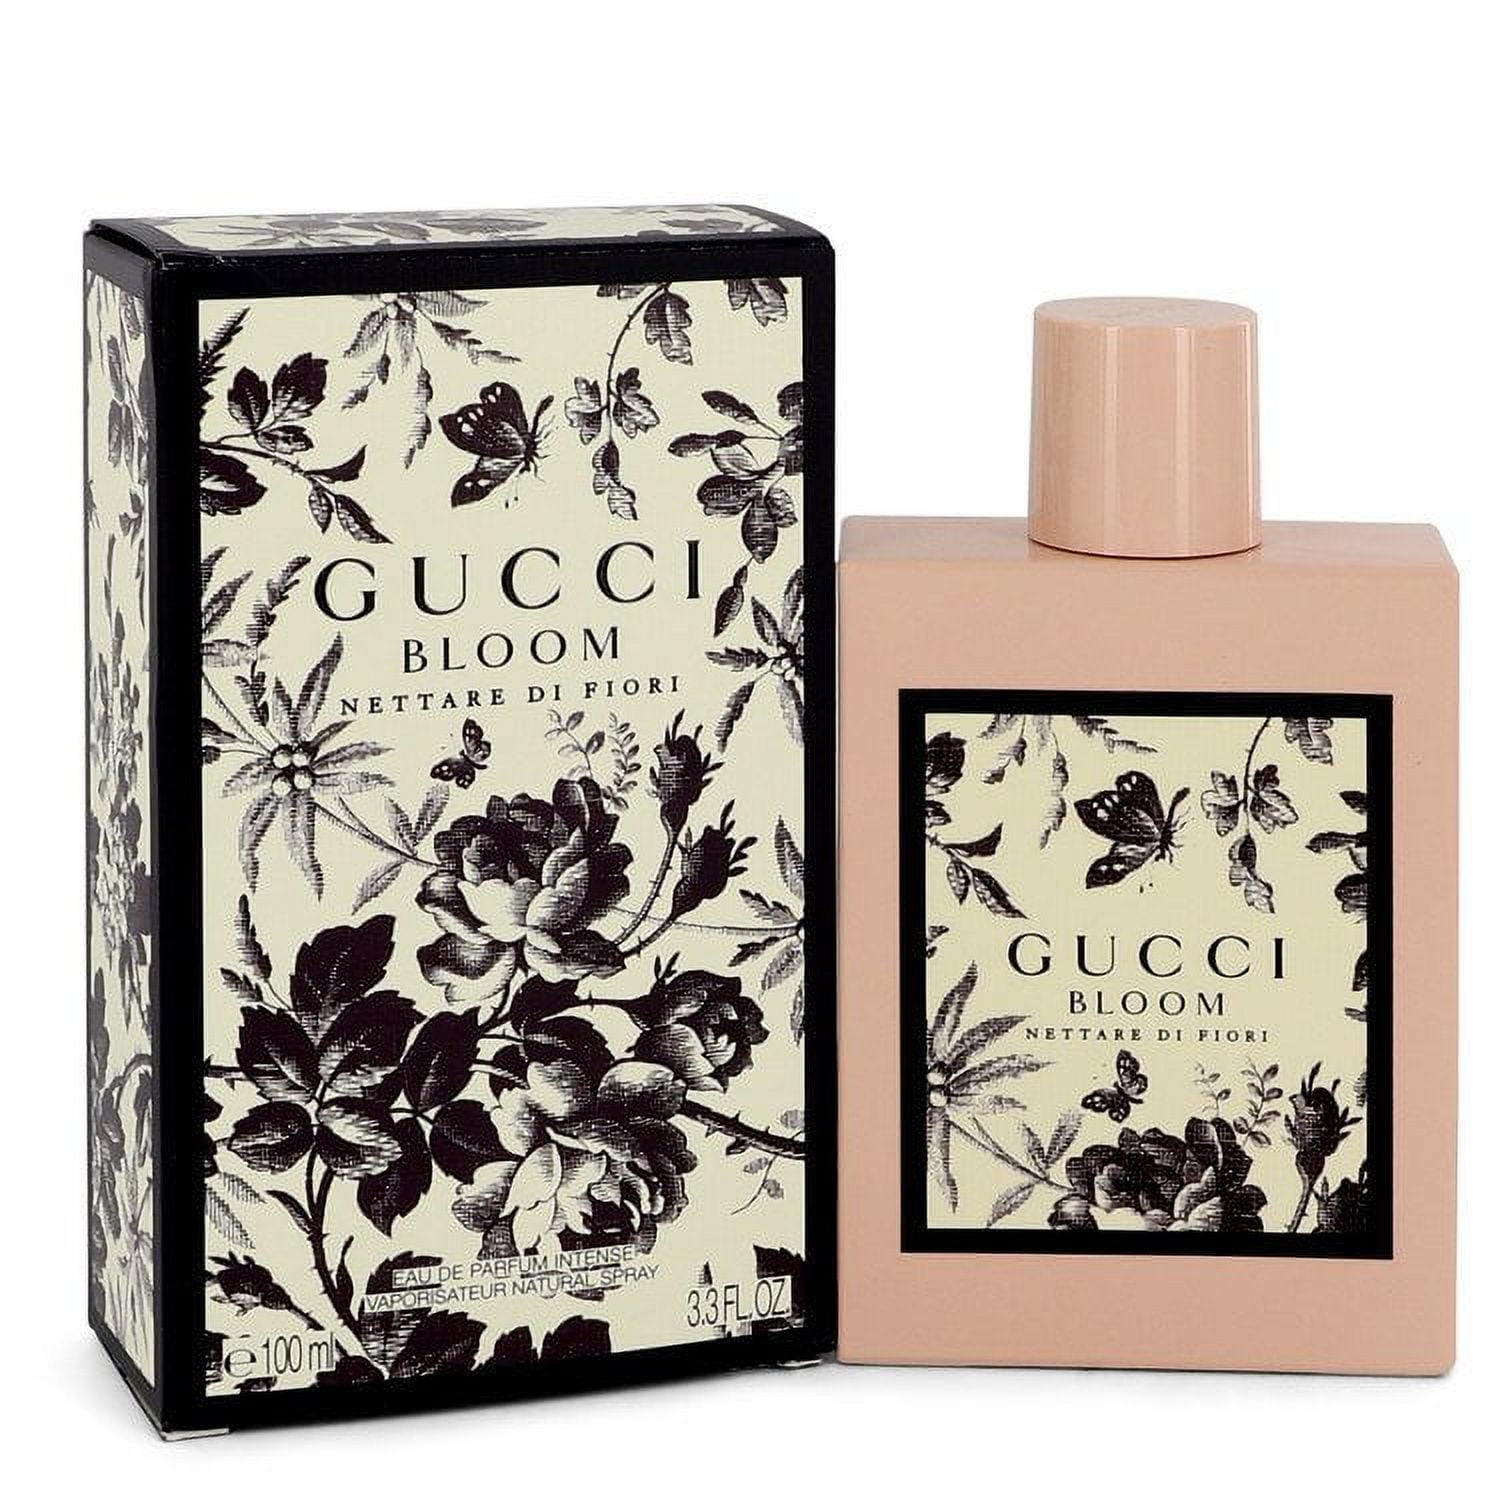 Gucci Bloom Nettare di Fiori by Gucci Eau De Parfum Intense Spray